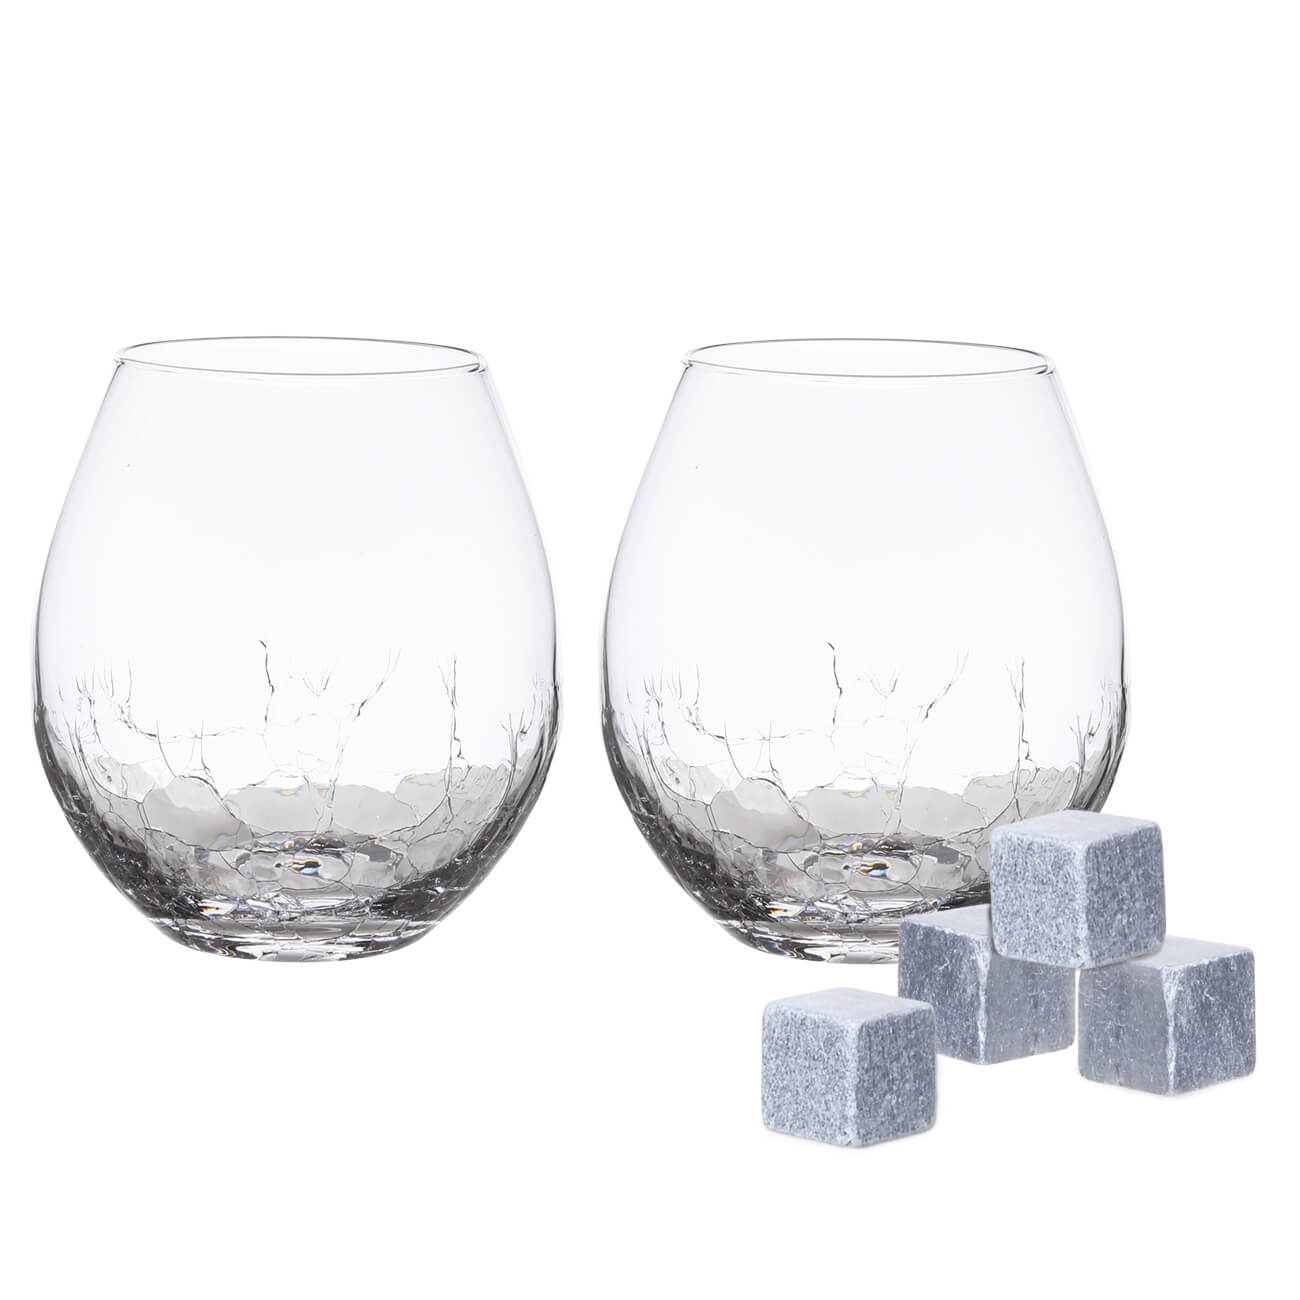 Набор для виски, 2 перс, 6 пр, стаканы/кубики, стекло/стеатит, Кракелюр, Ice - фото 1